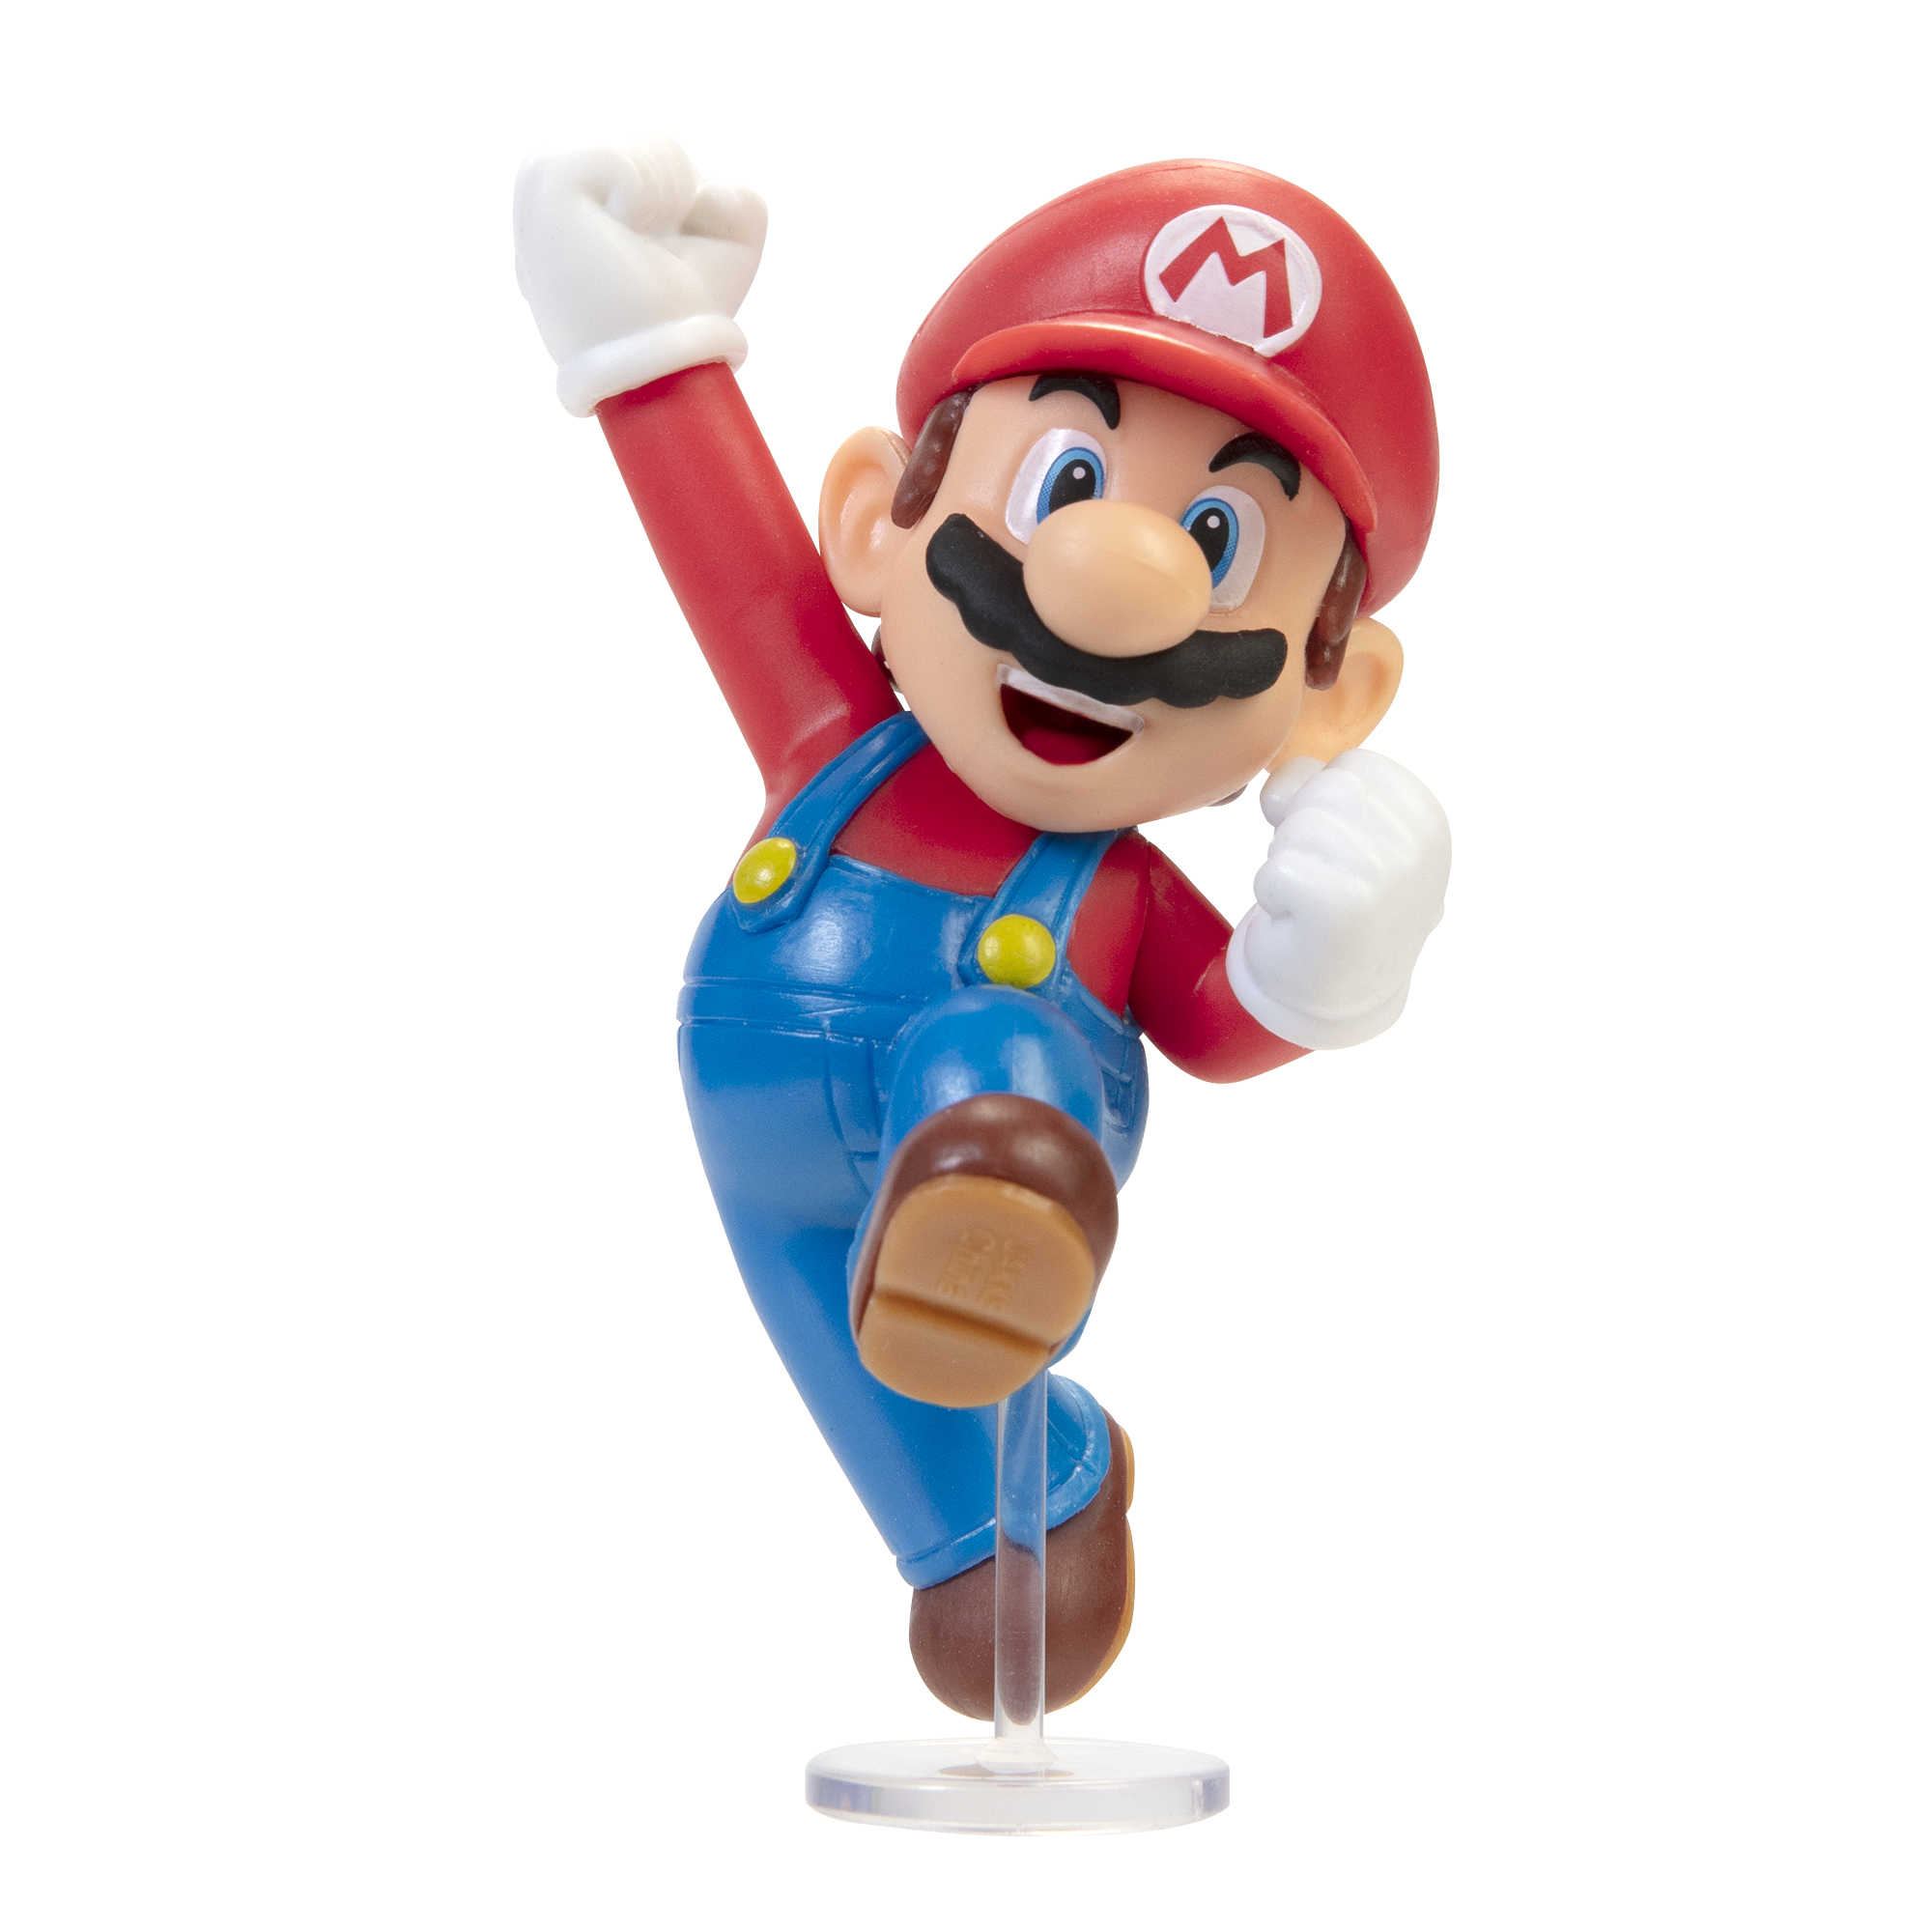 Super Mario Articulated Action Figure 2.5″ Jumping Mario